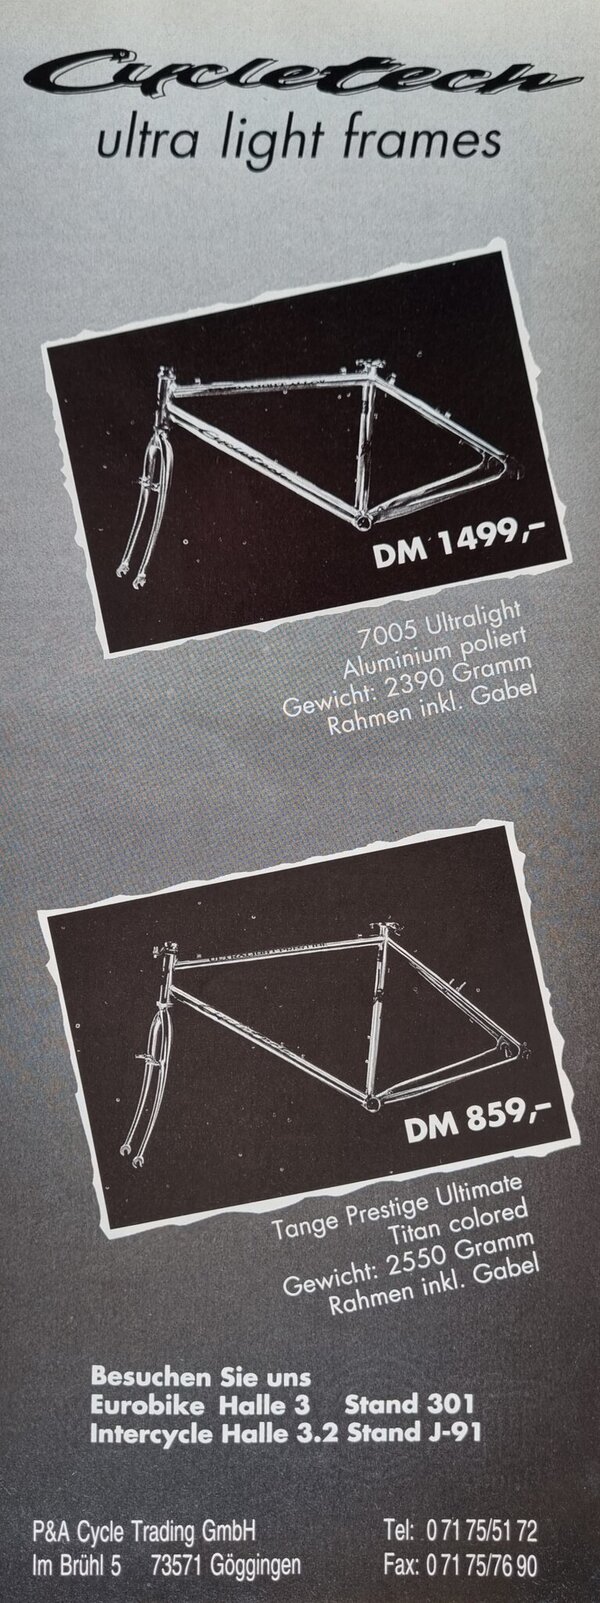 Cycletech Ad aus Bike 1993 09.jpg